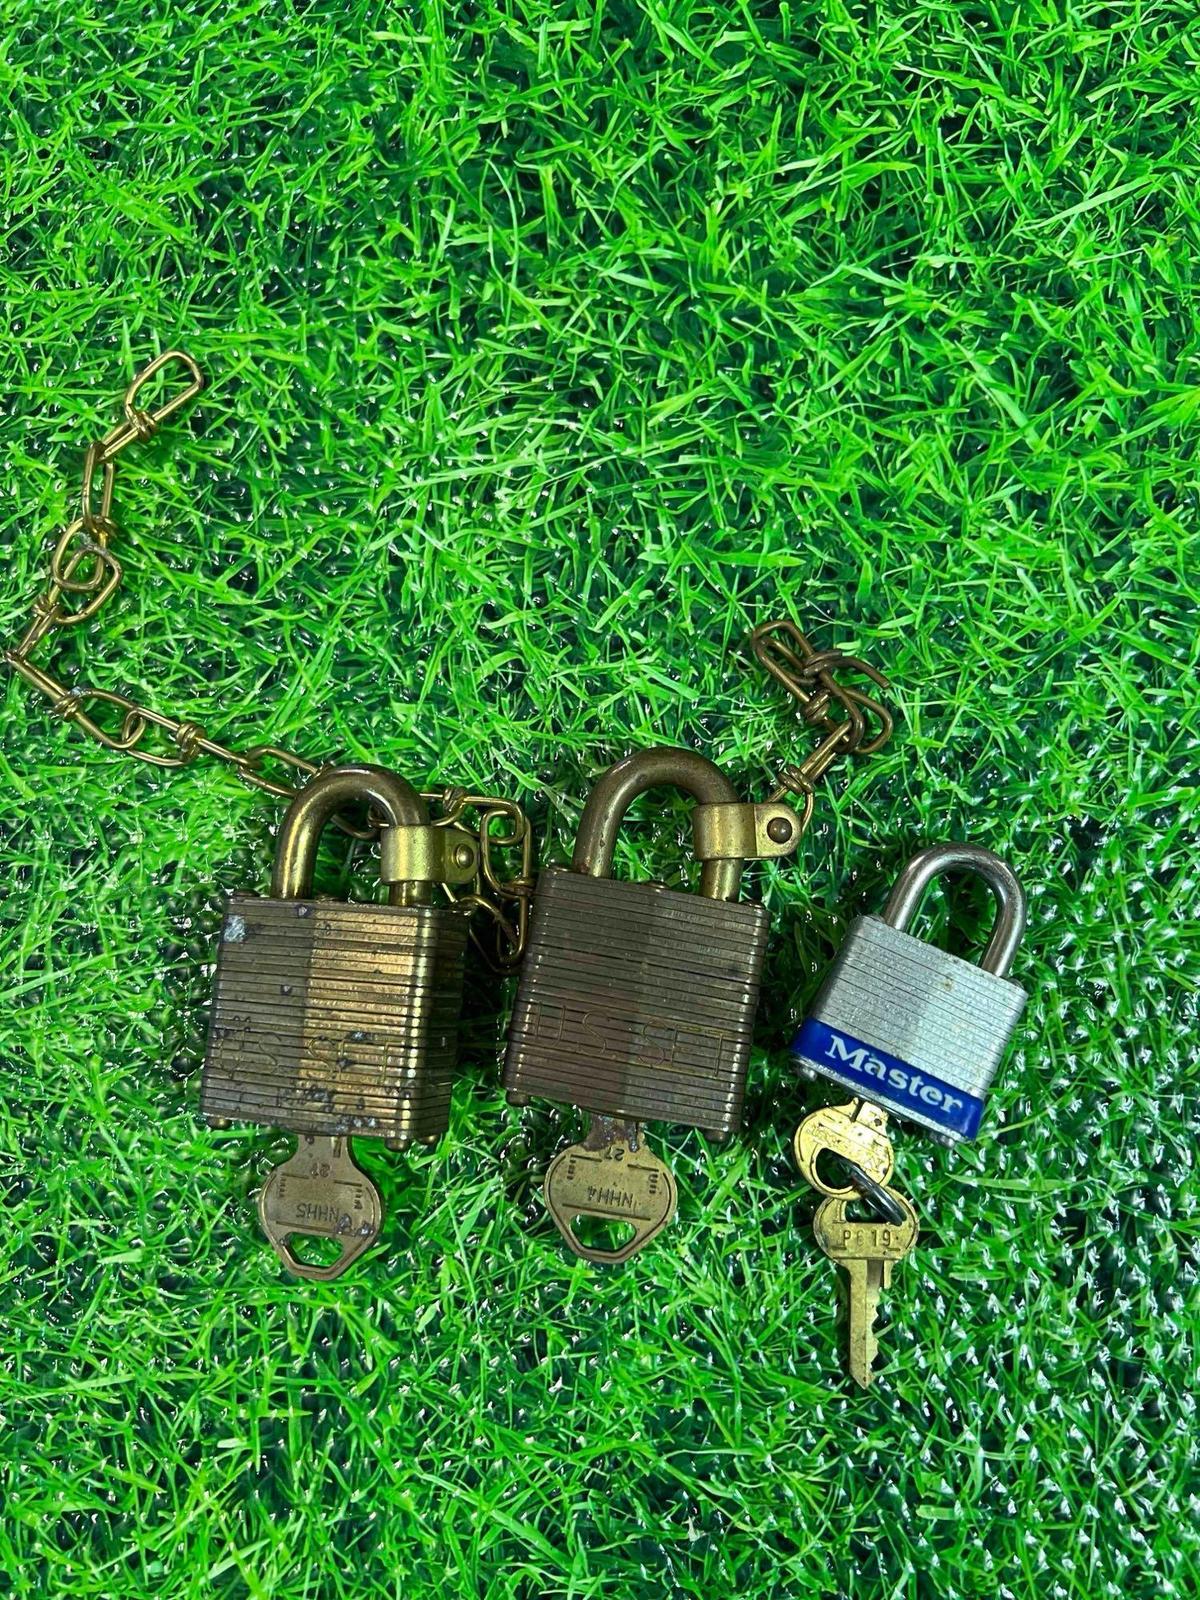 three locks with keys